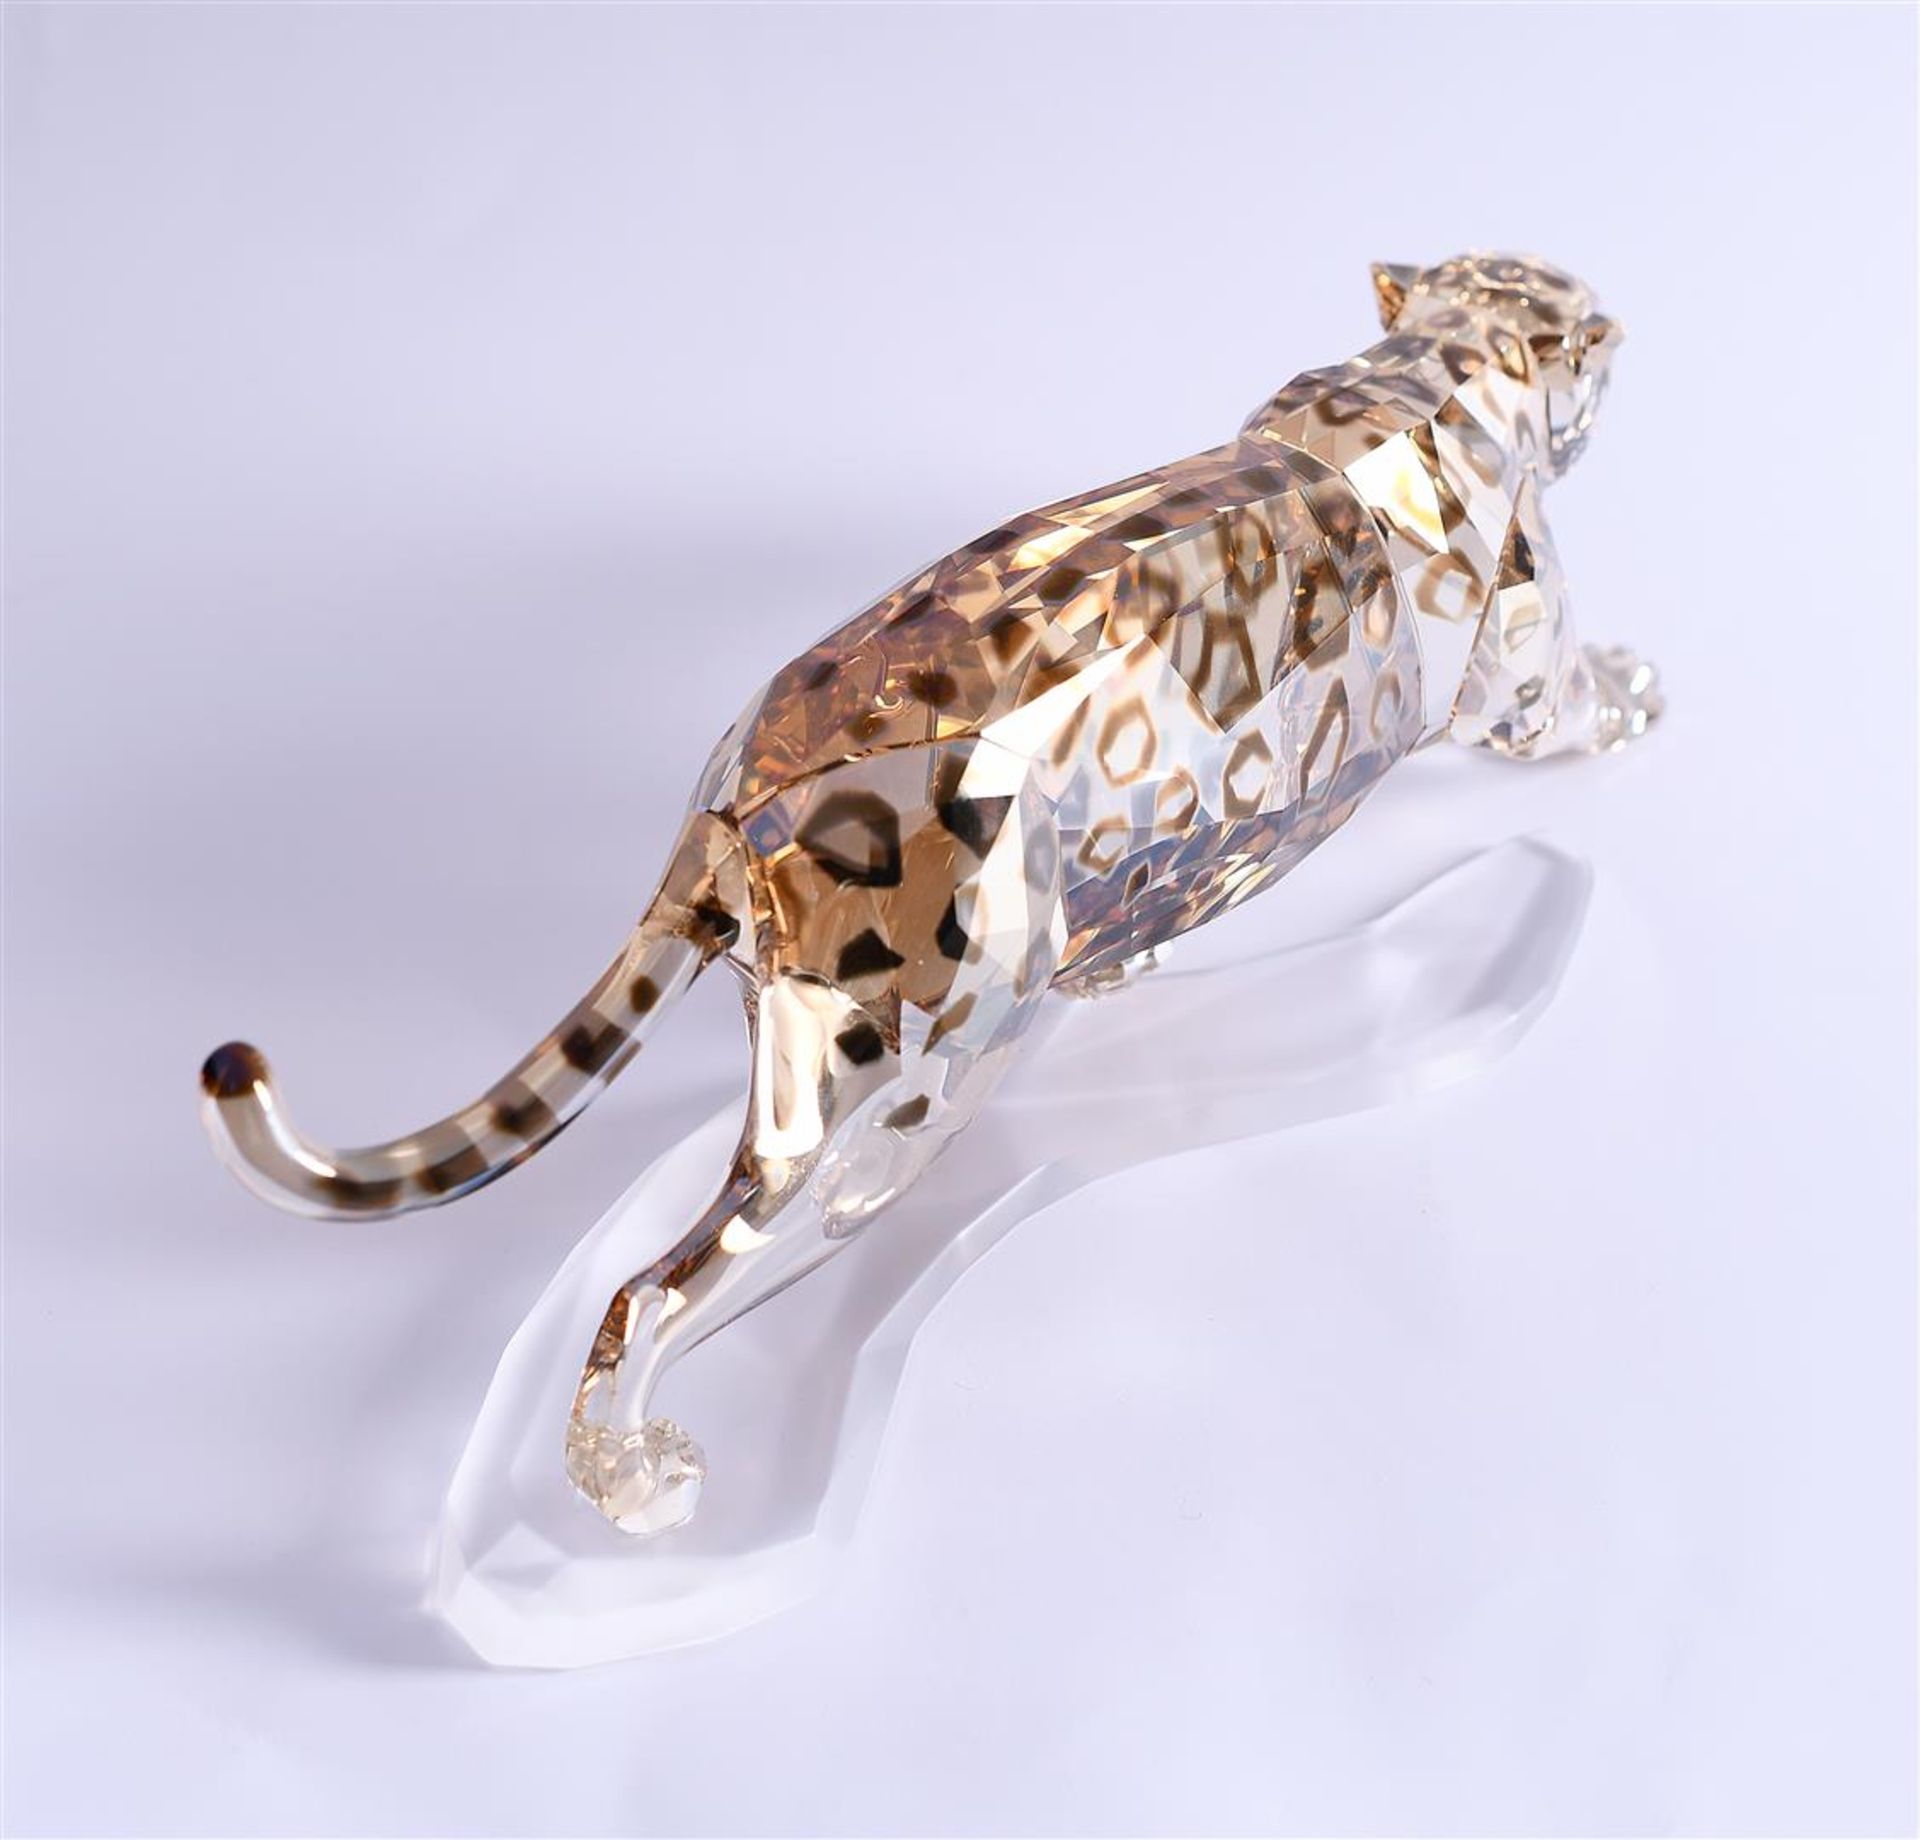 Swarovski, Christmas ornament Jaguar Year of issue 2012, 1096796. Includes original box
L. 17 cm. - Bild 5 aus 6